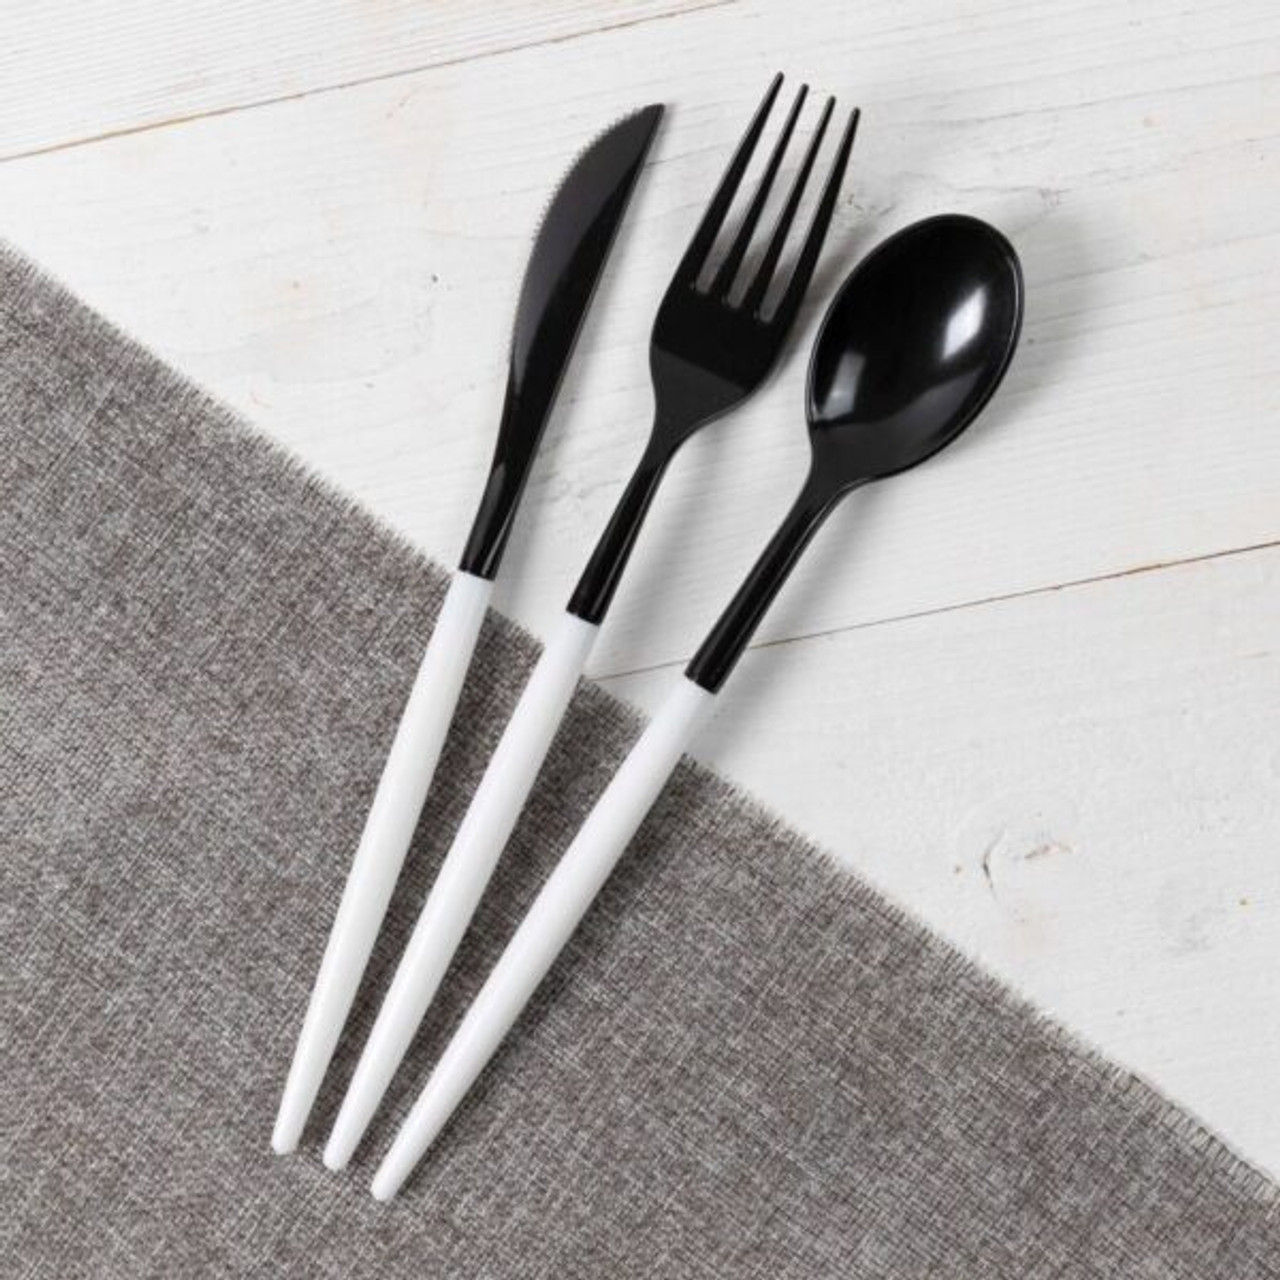 Chic Plastic Flatware Black / White Combo Forks, Spoons Knives 24ct.